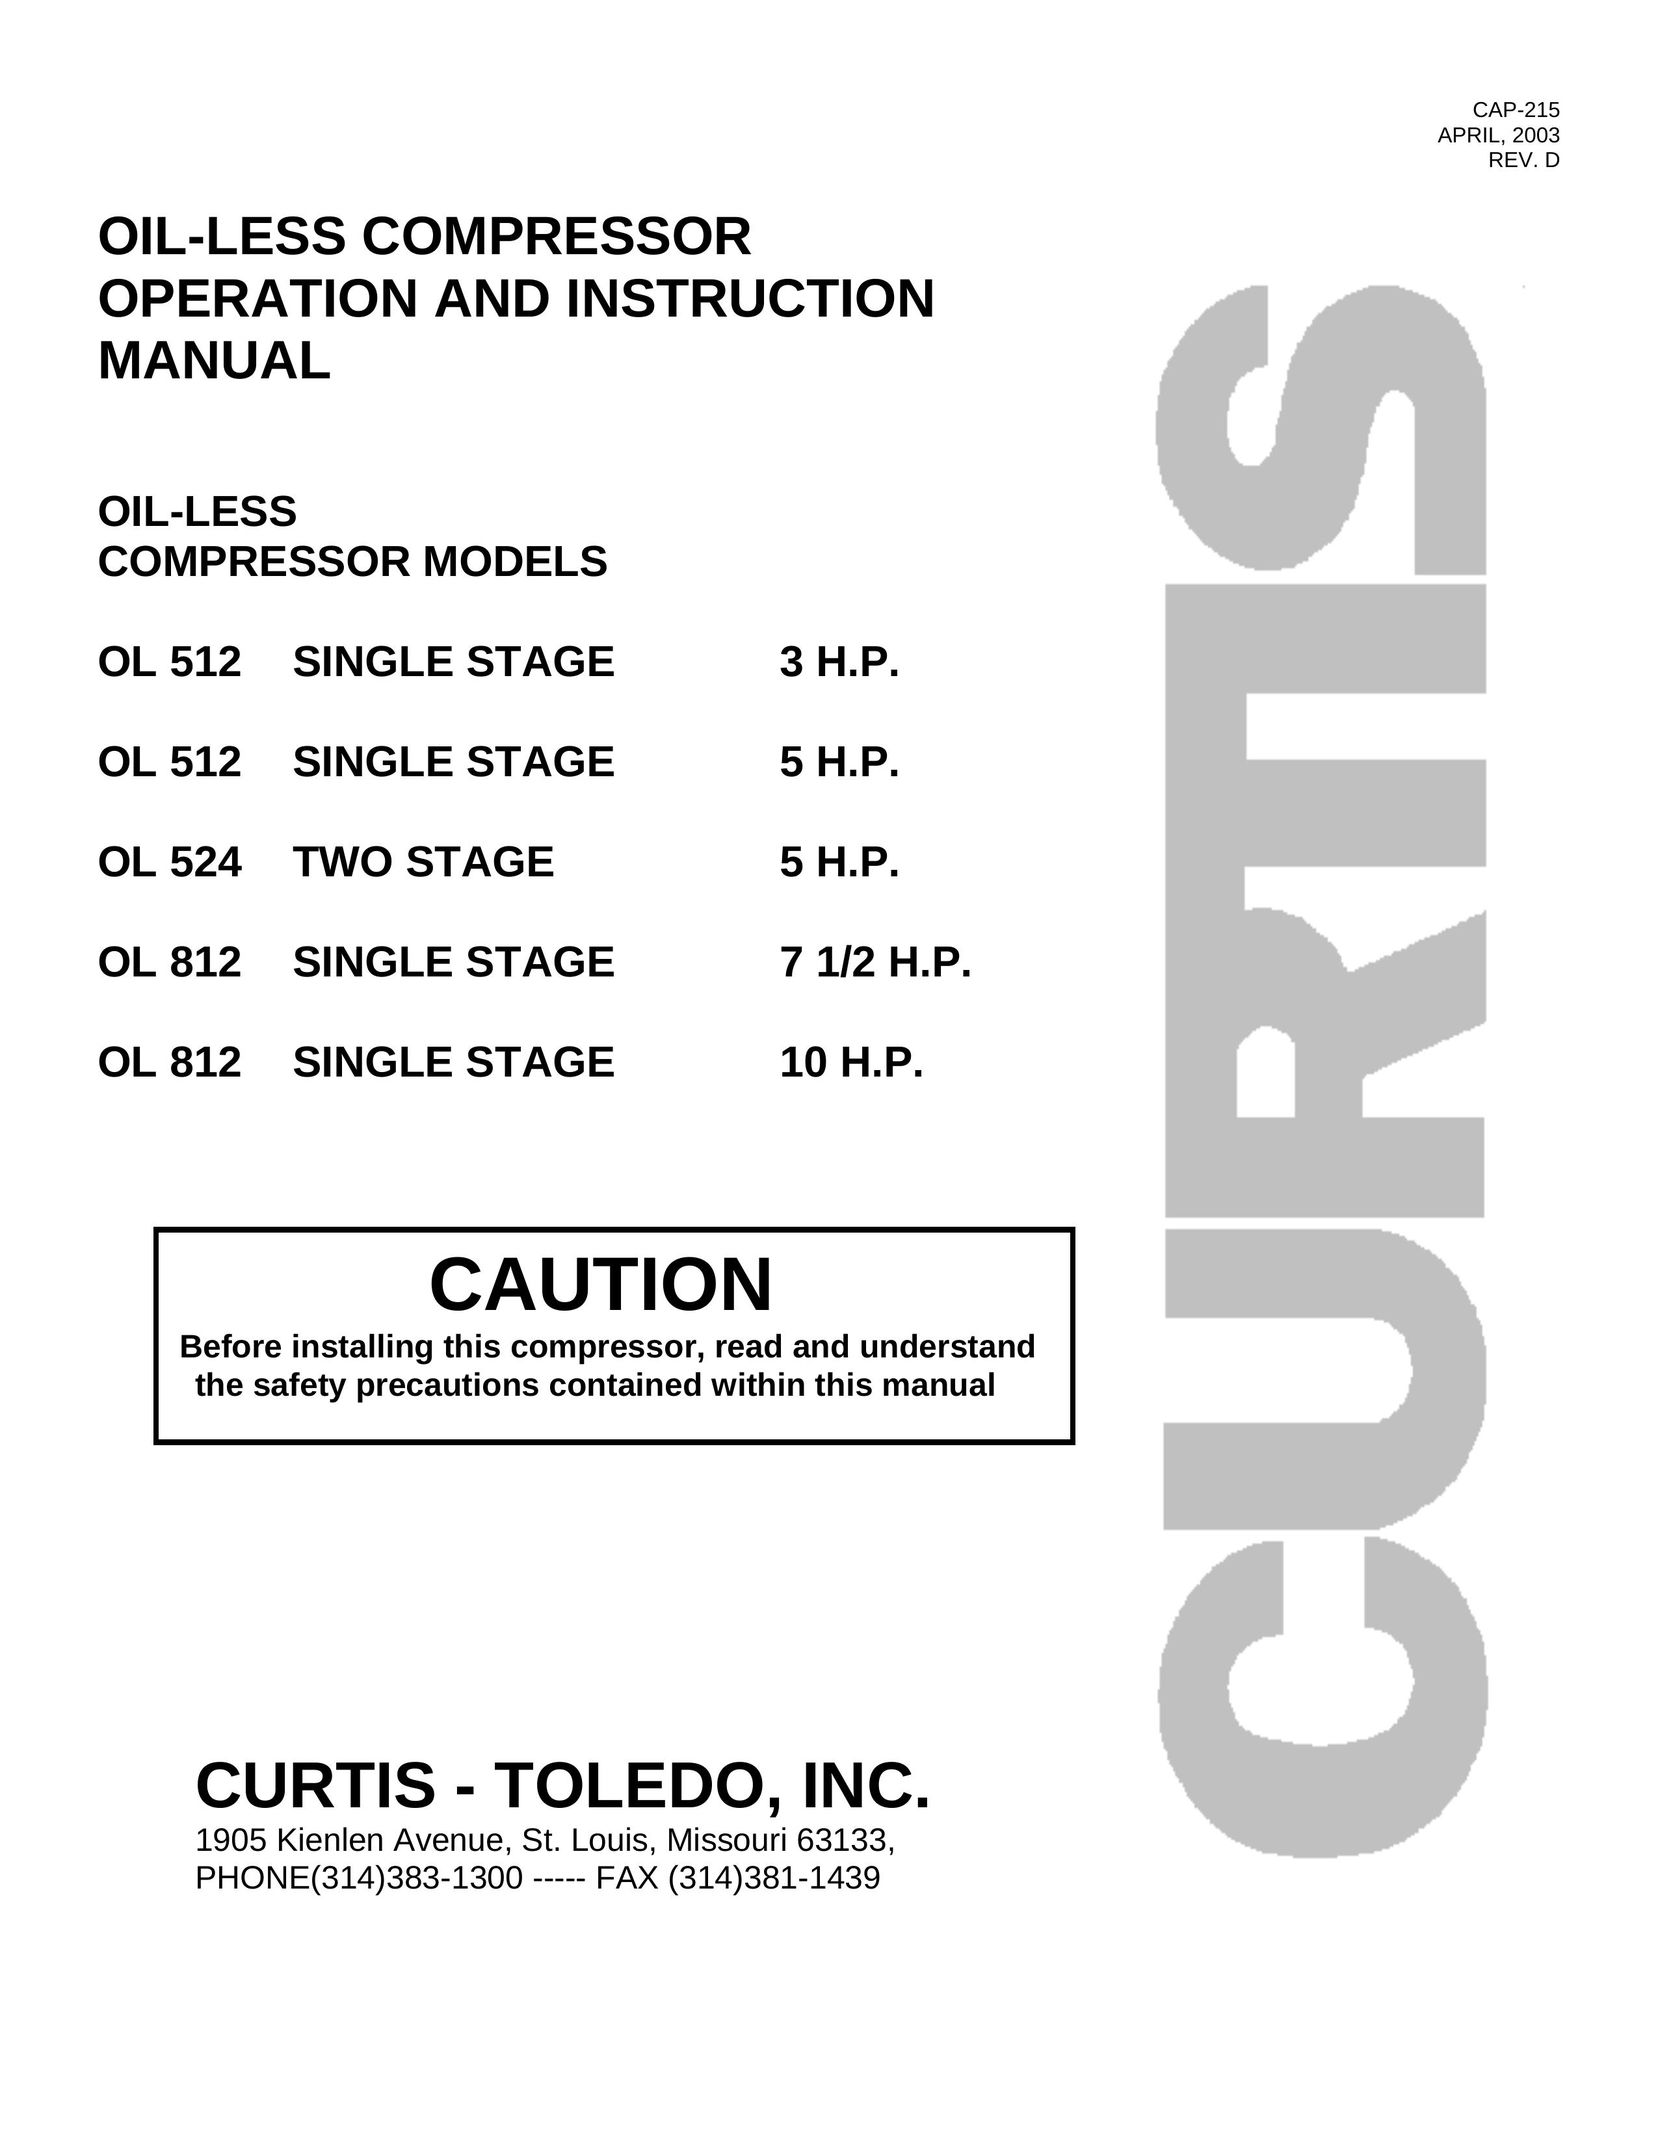 Curtis OL 524 Air Compressor User Manual